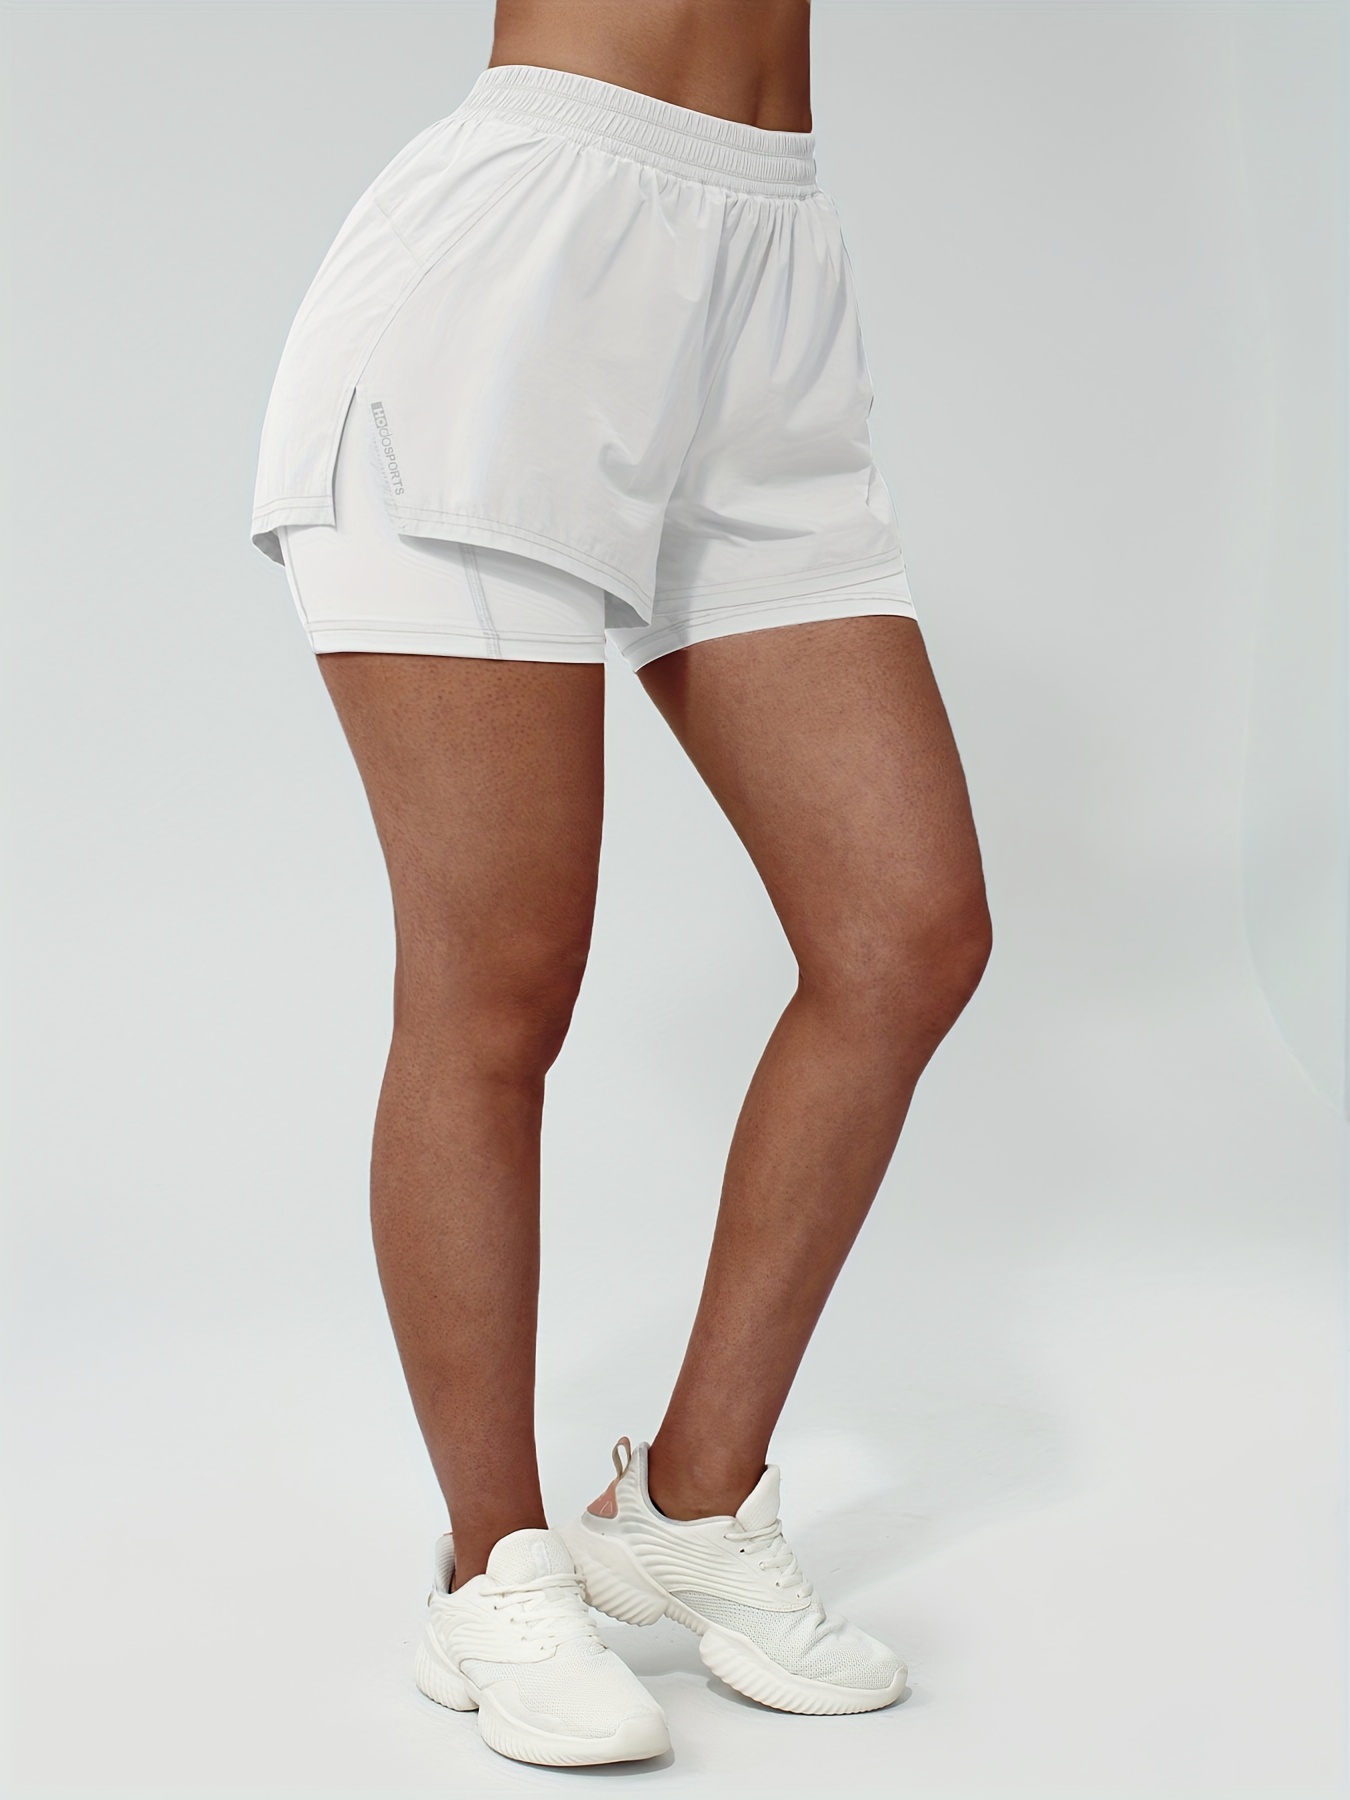 BLUEDREAMER pantalones cortos deportivos para mujer pantalones de